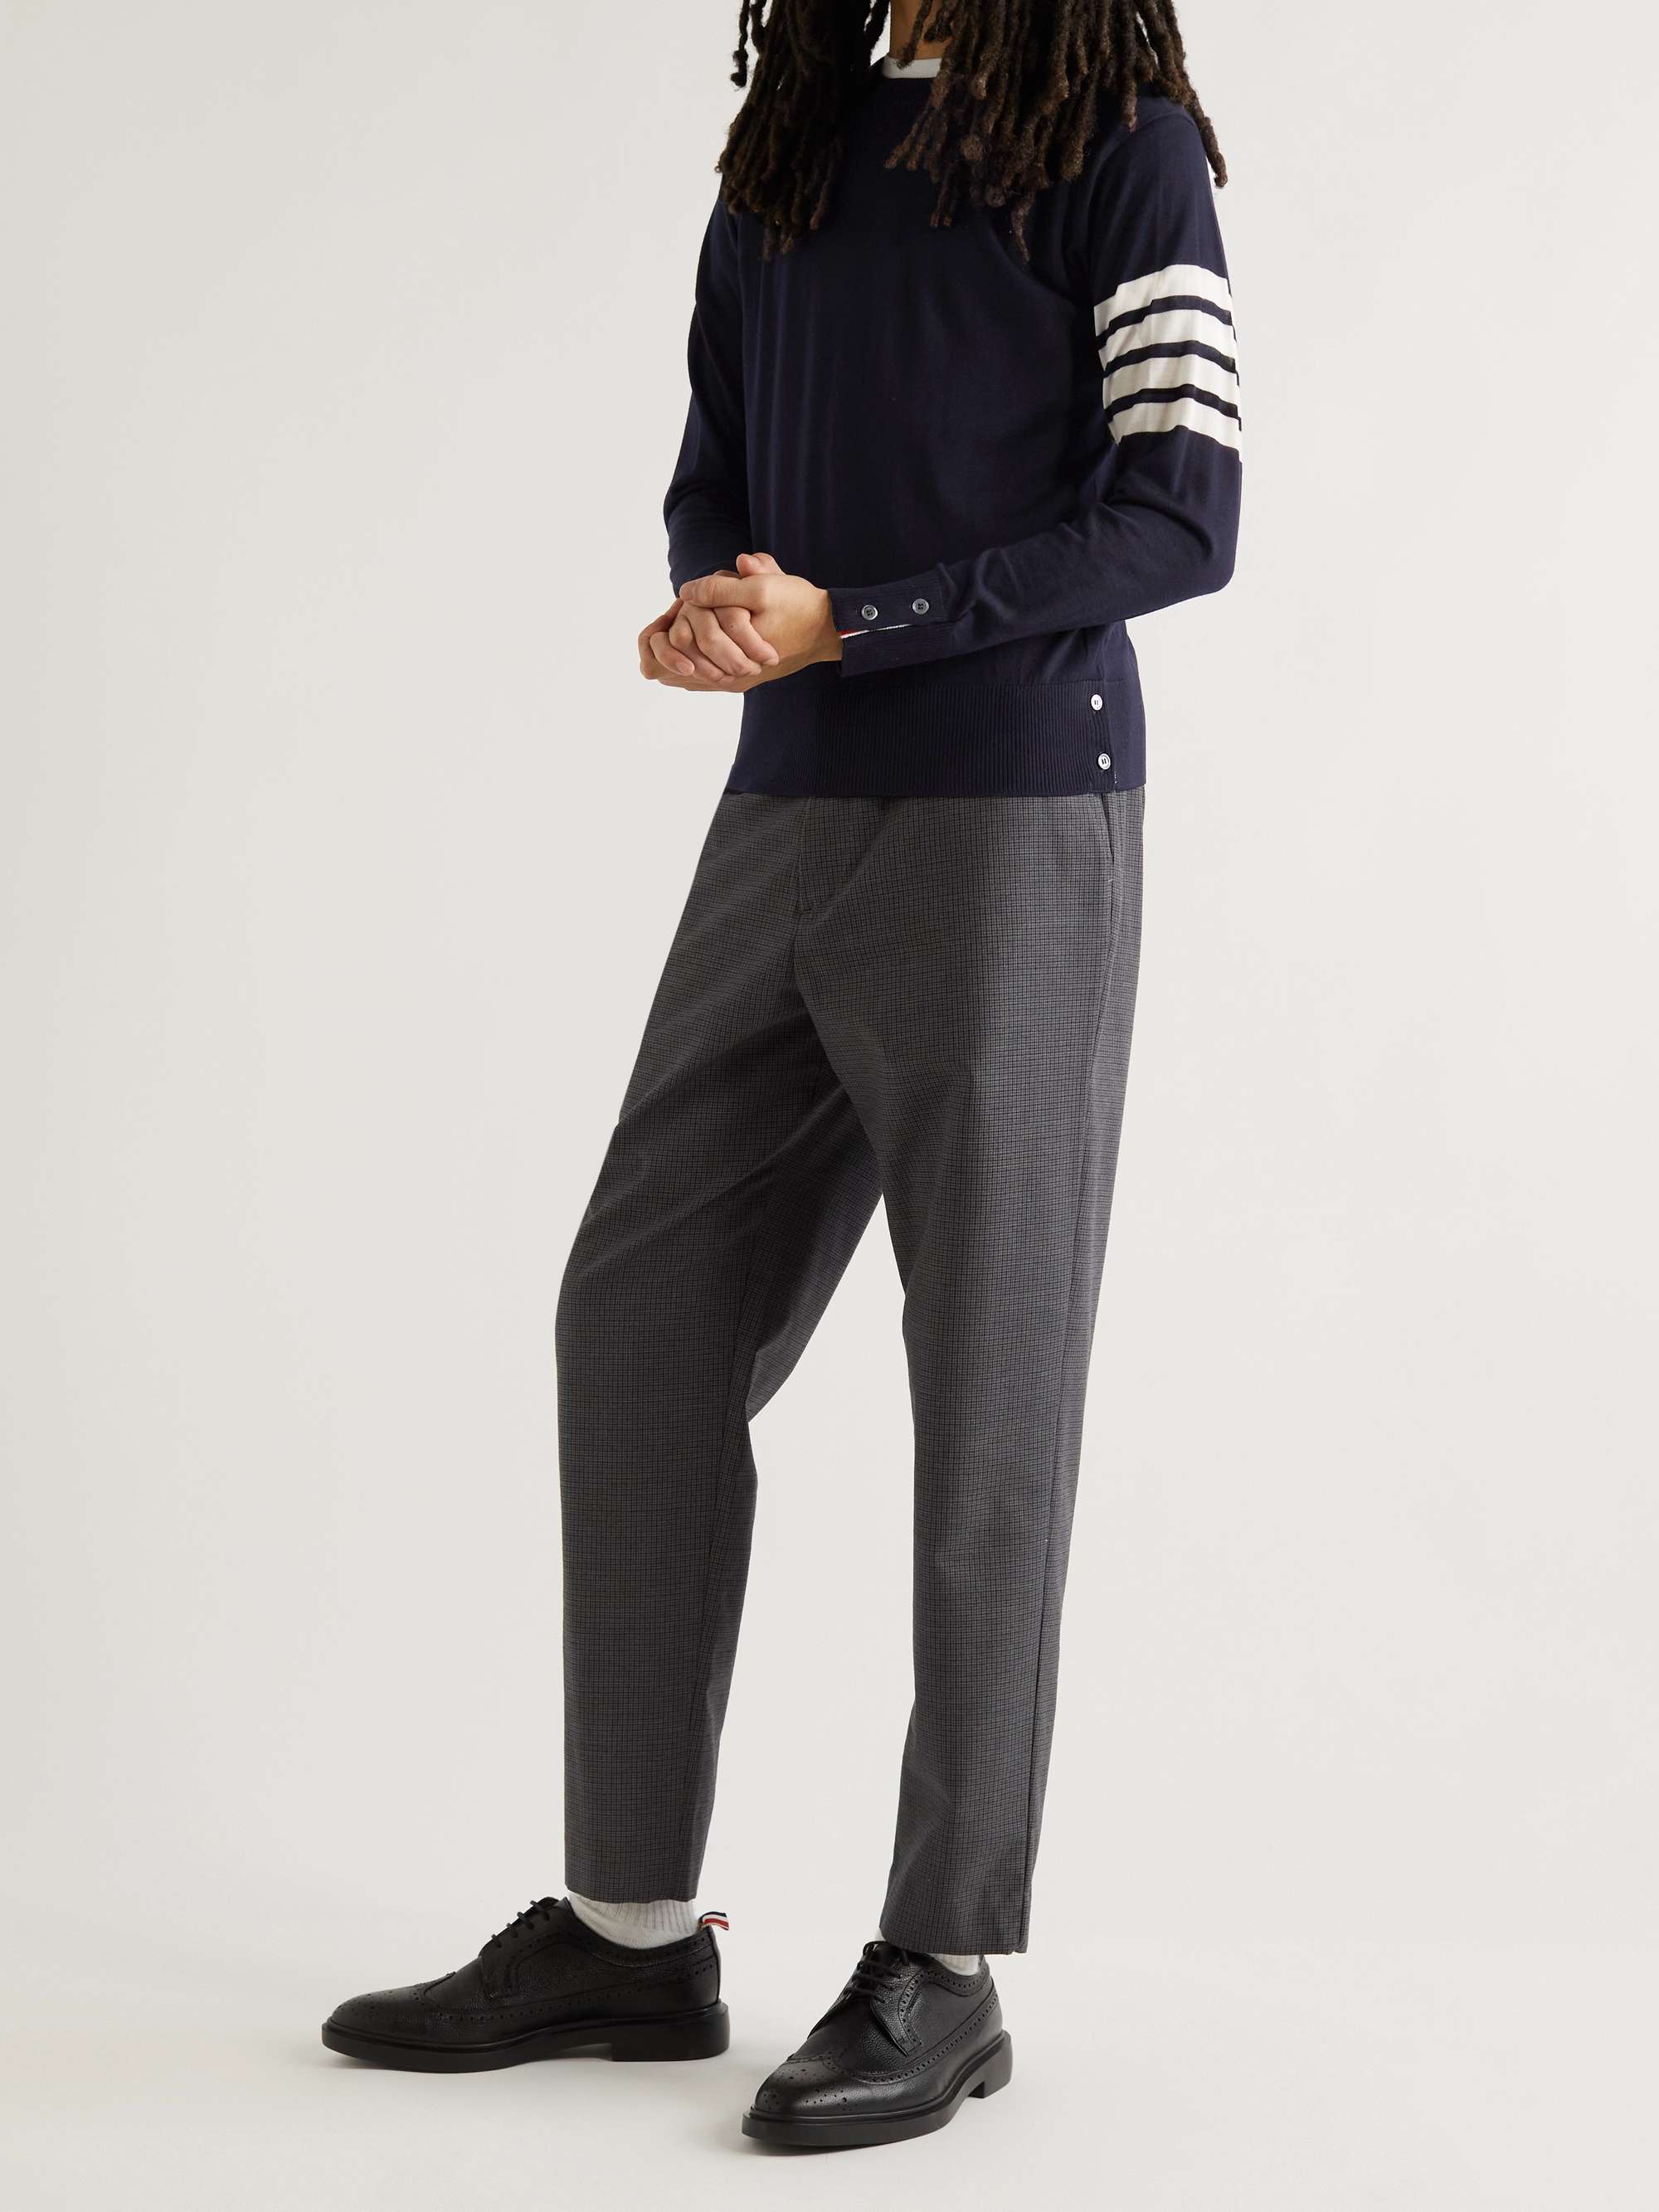 THOM BROWNE Striped Merino Wool Sweater